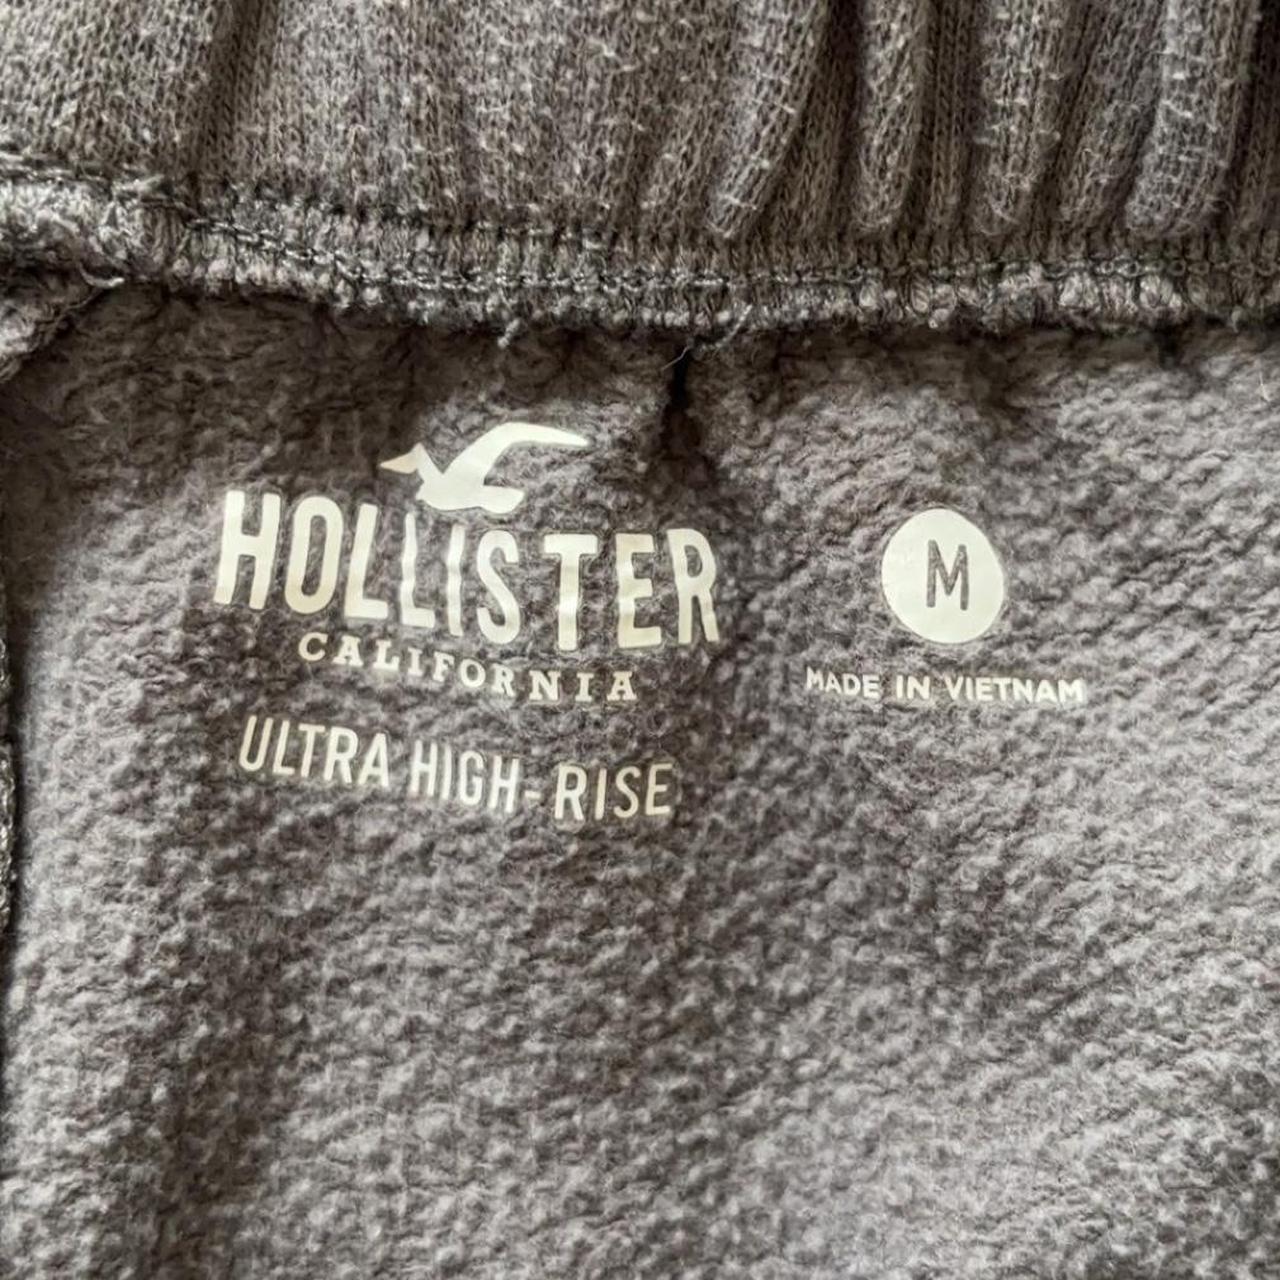 Medium Hollister sweatpants